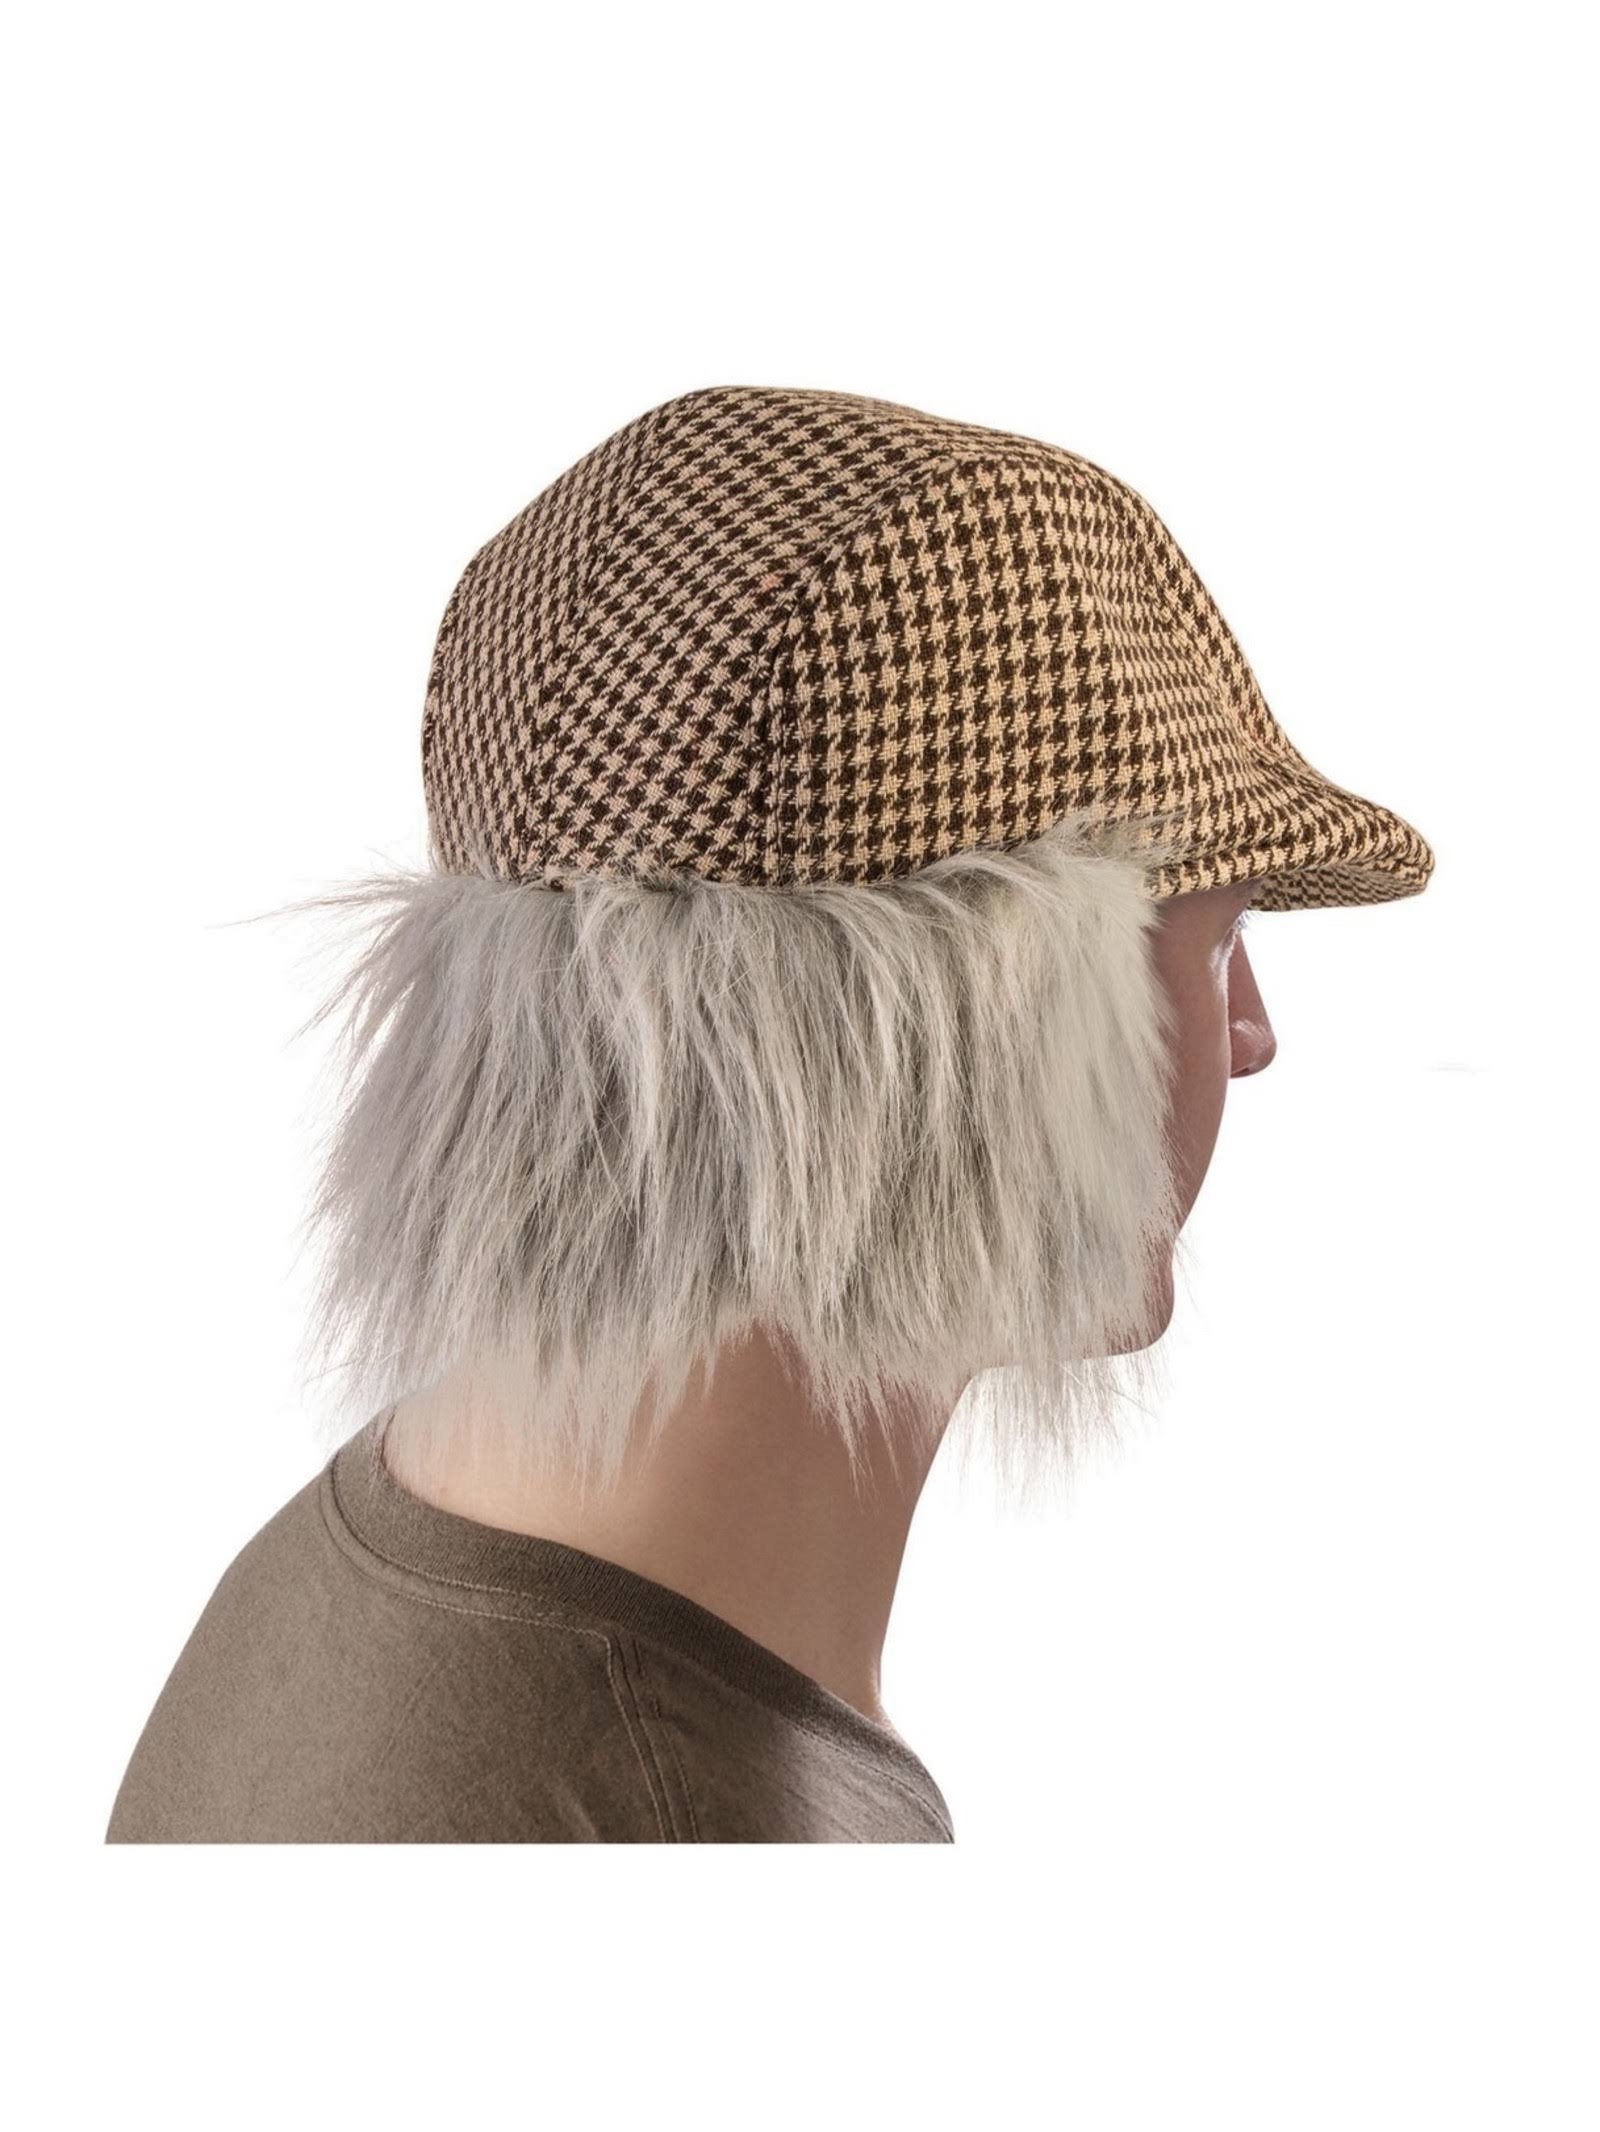 Gray Old Man Hat & Wig Adult Halloween Costume Cap